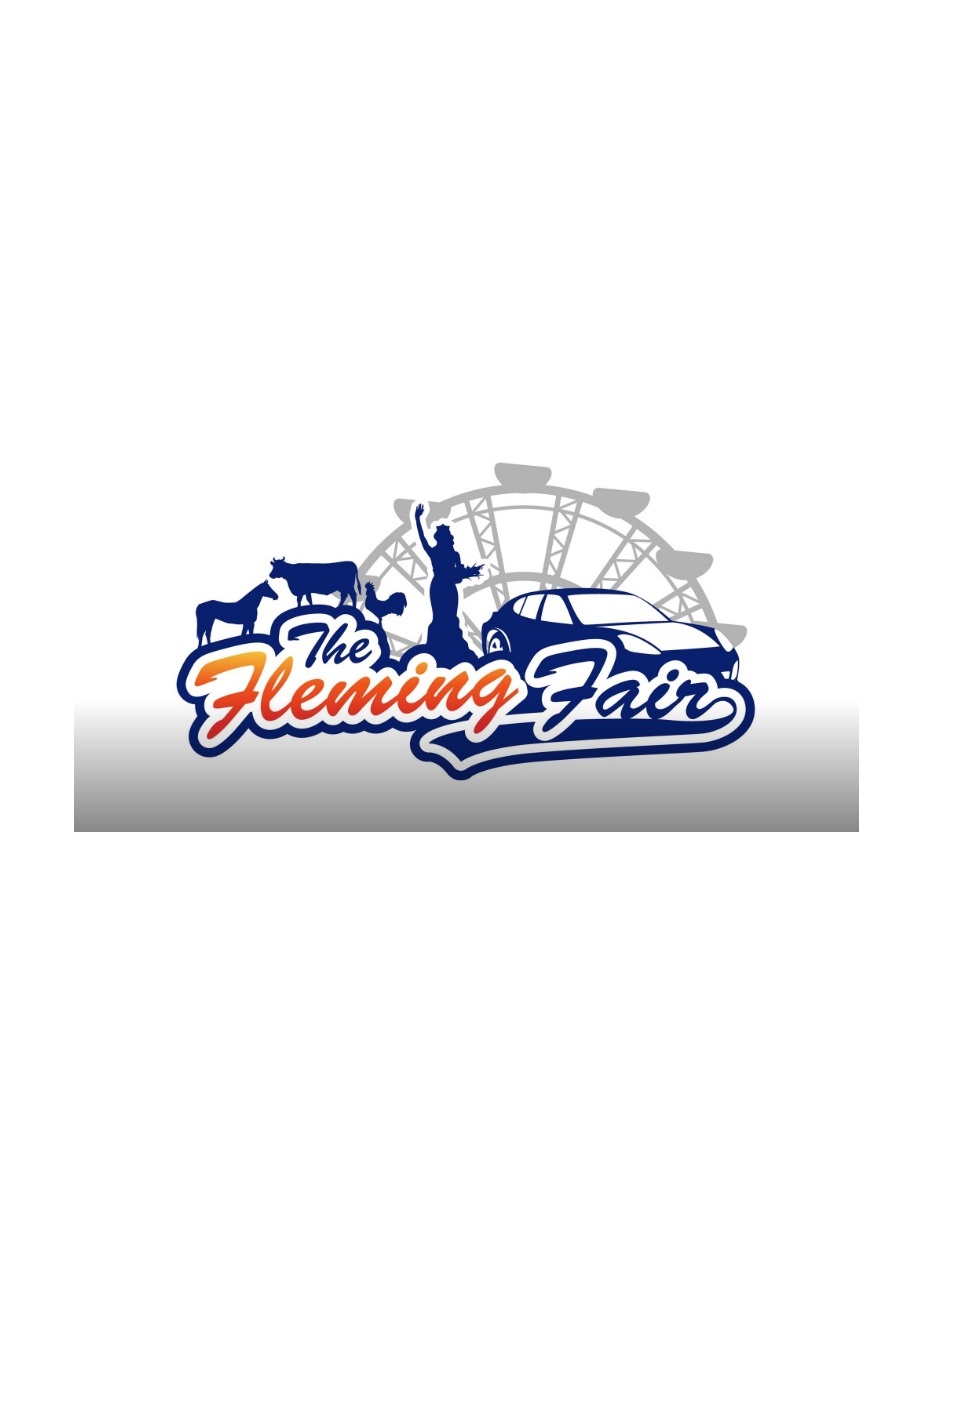 Ewing - Fleming County Fair logo